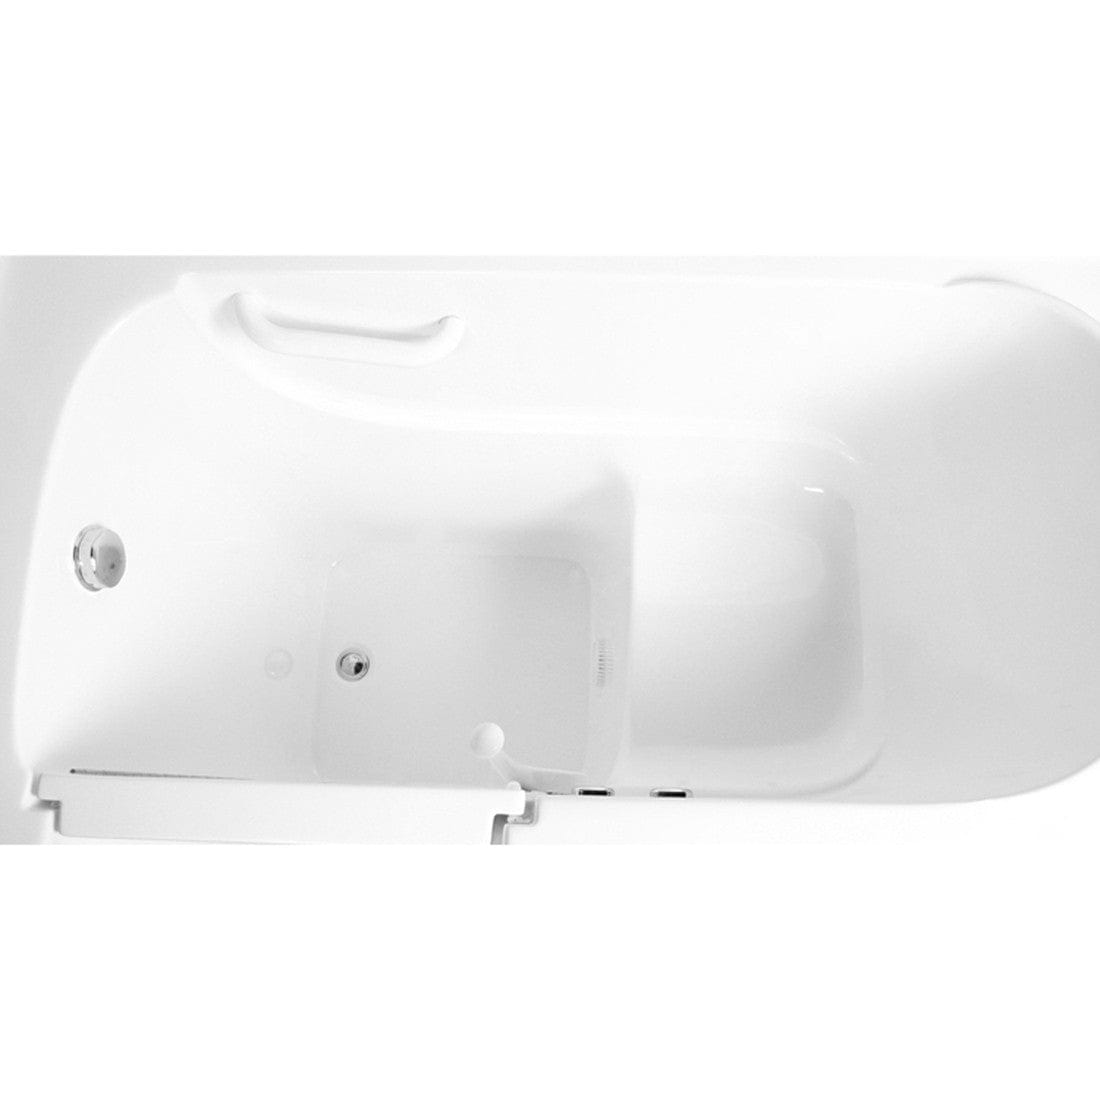 Ariel EZWT-2651 Soaker Series Walk-In Tub | EZWT-2651-SOAKER-L